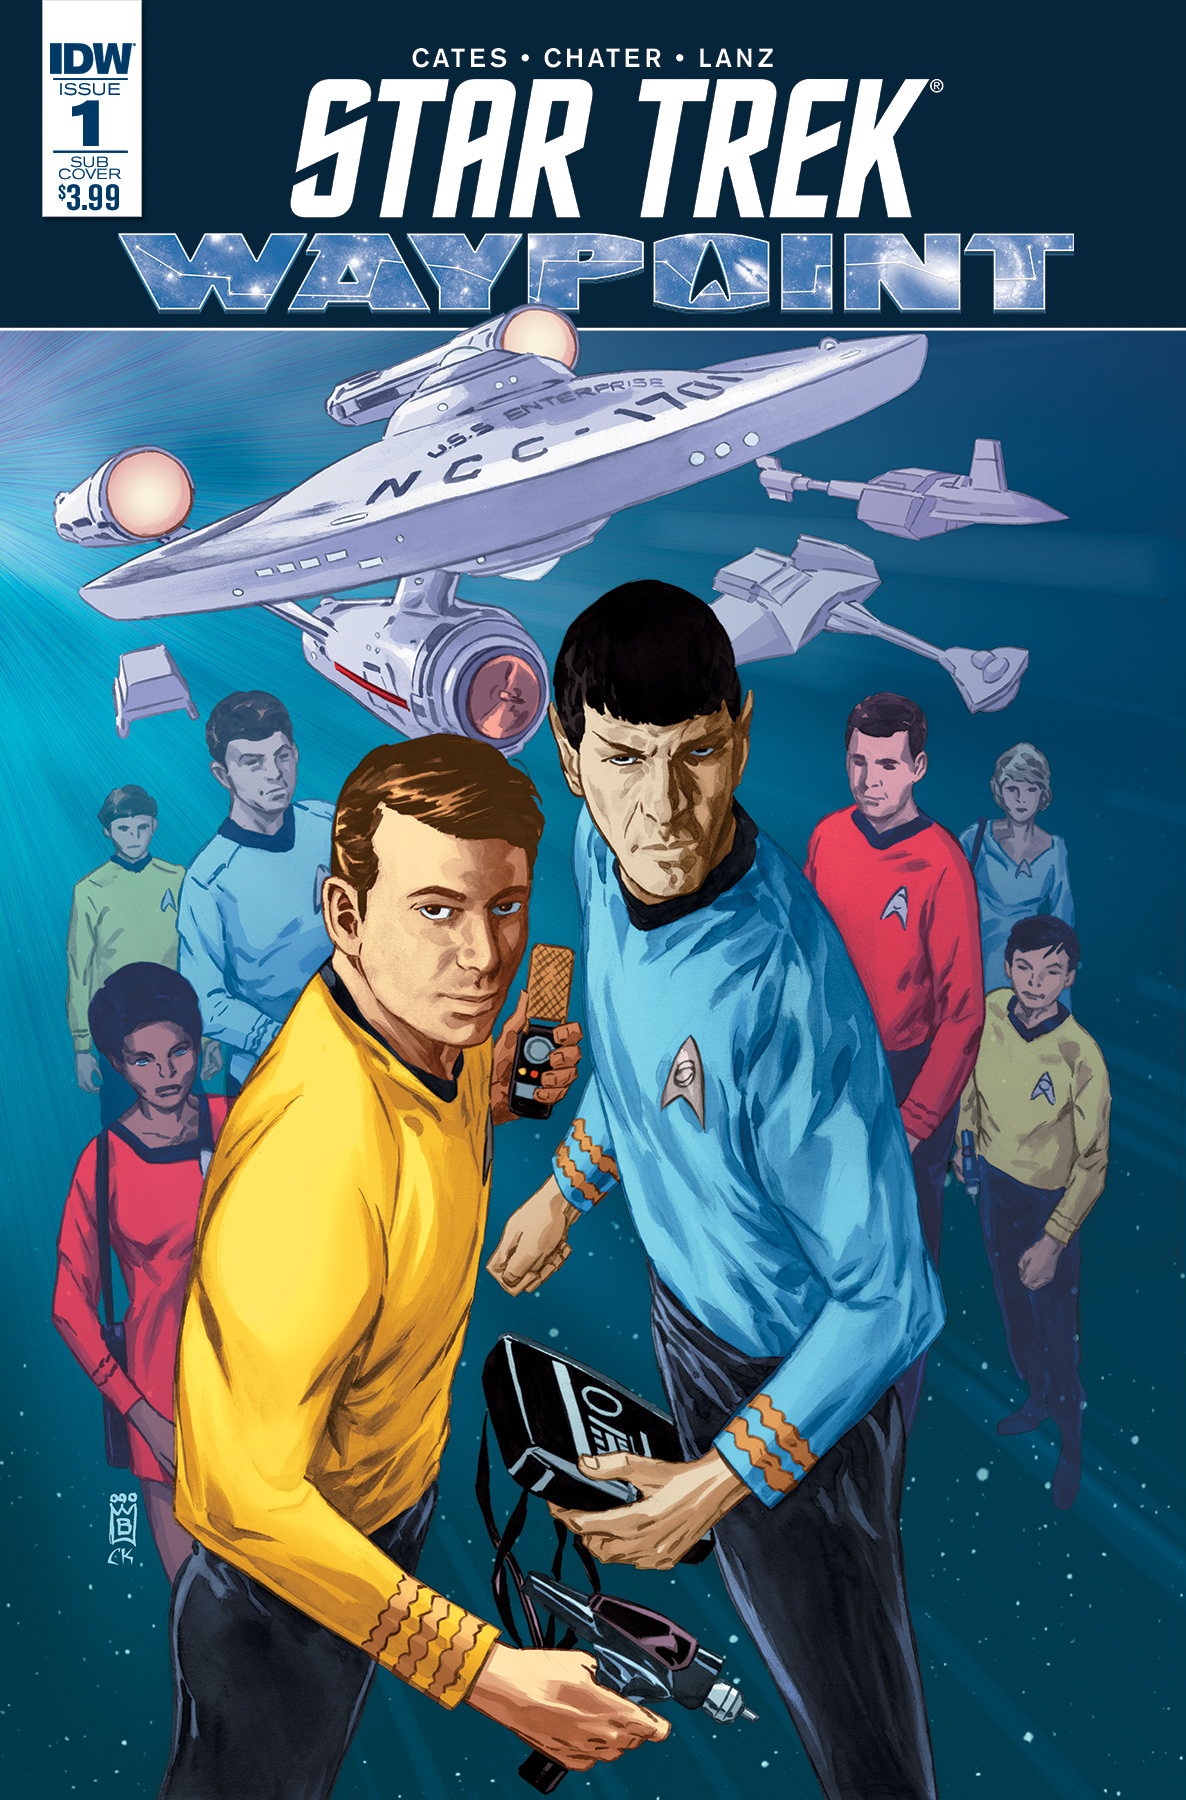 The Original Star Trek Universe Returns In IDW’s New Comic Anthology